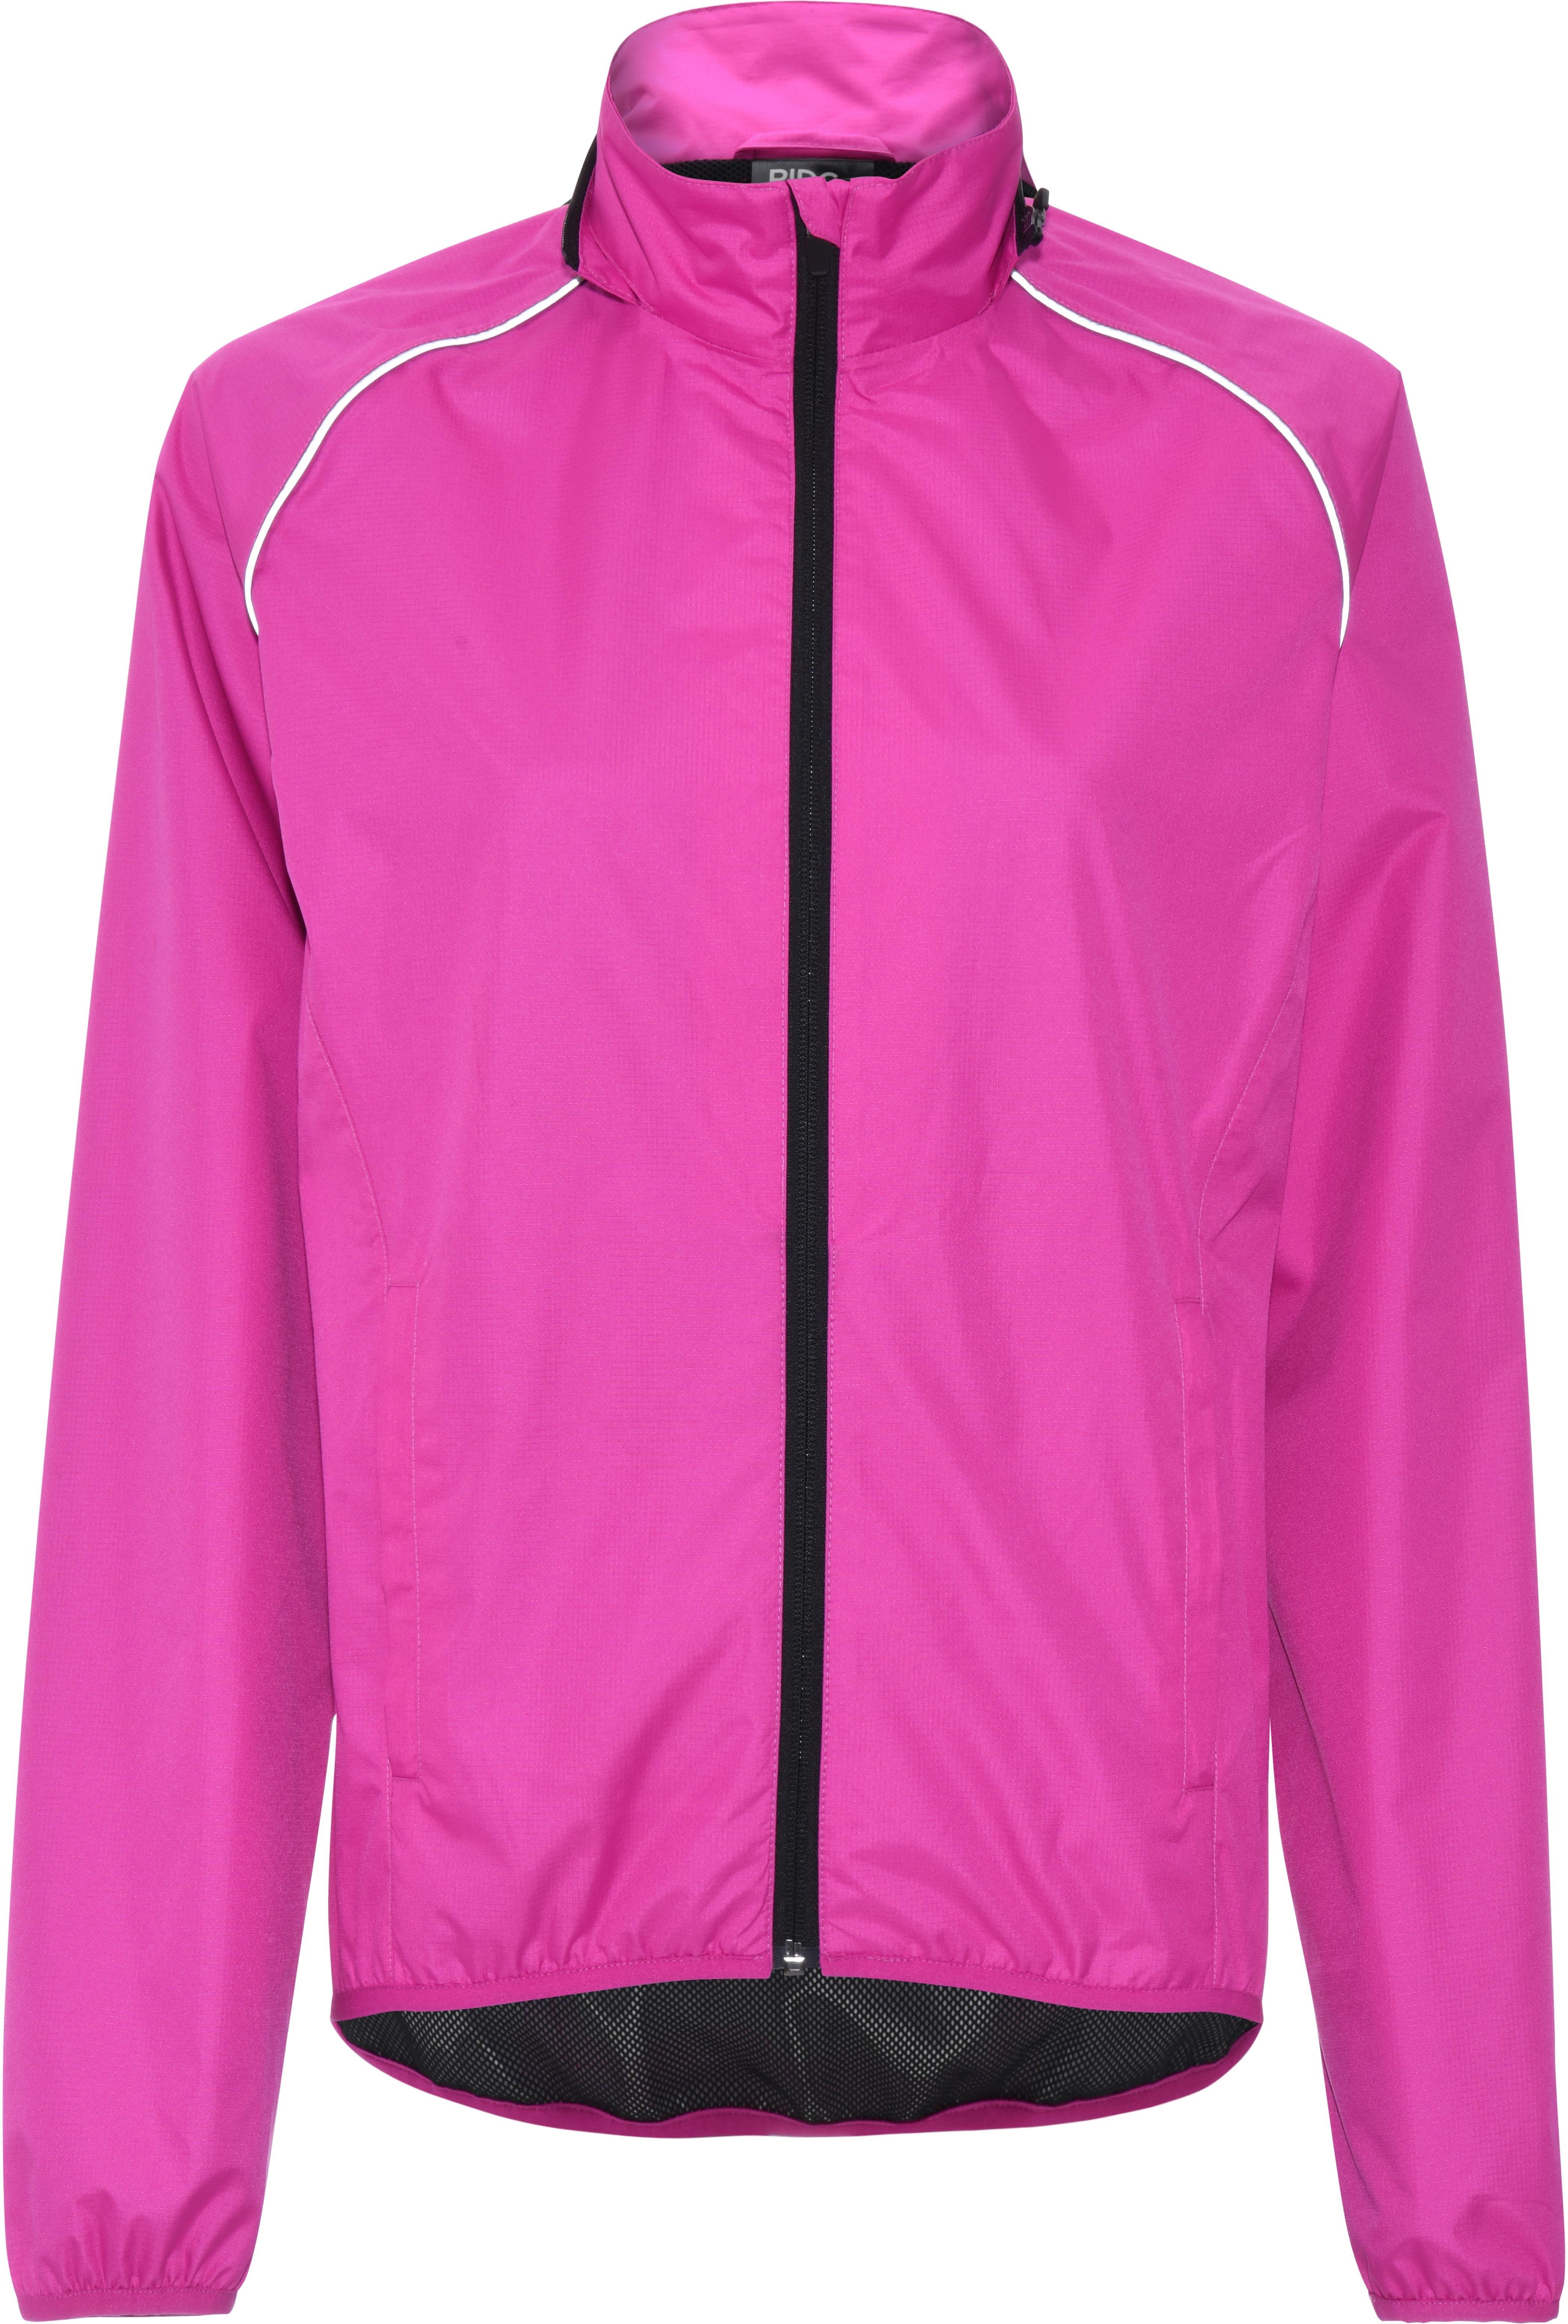 Ridge Womens Waterproof Jacket - Pink, 14